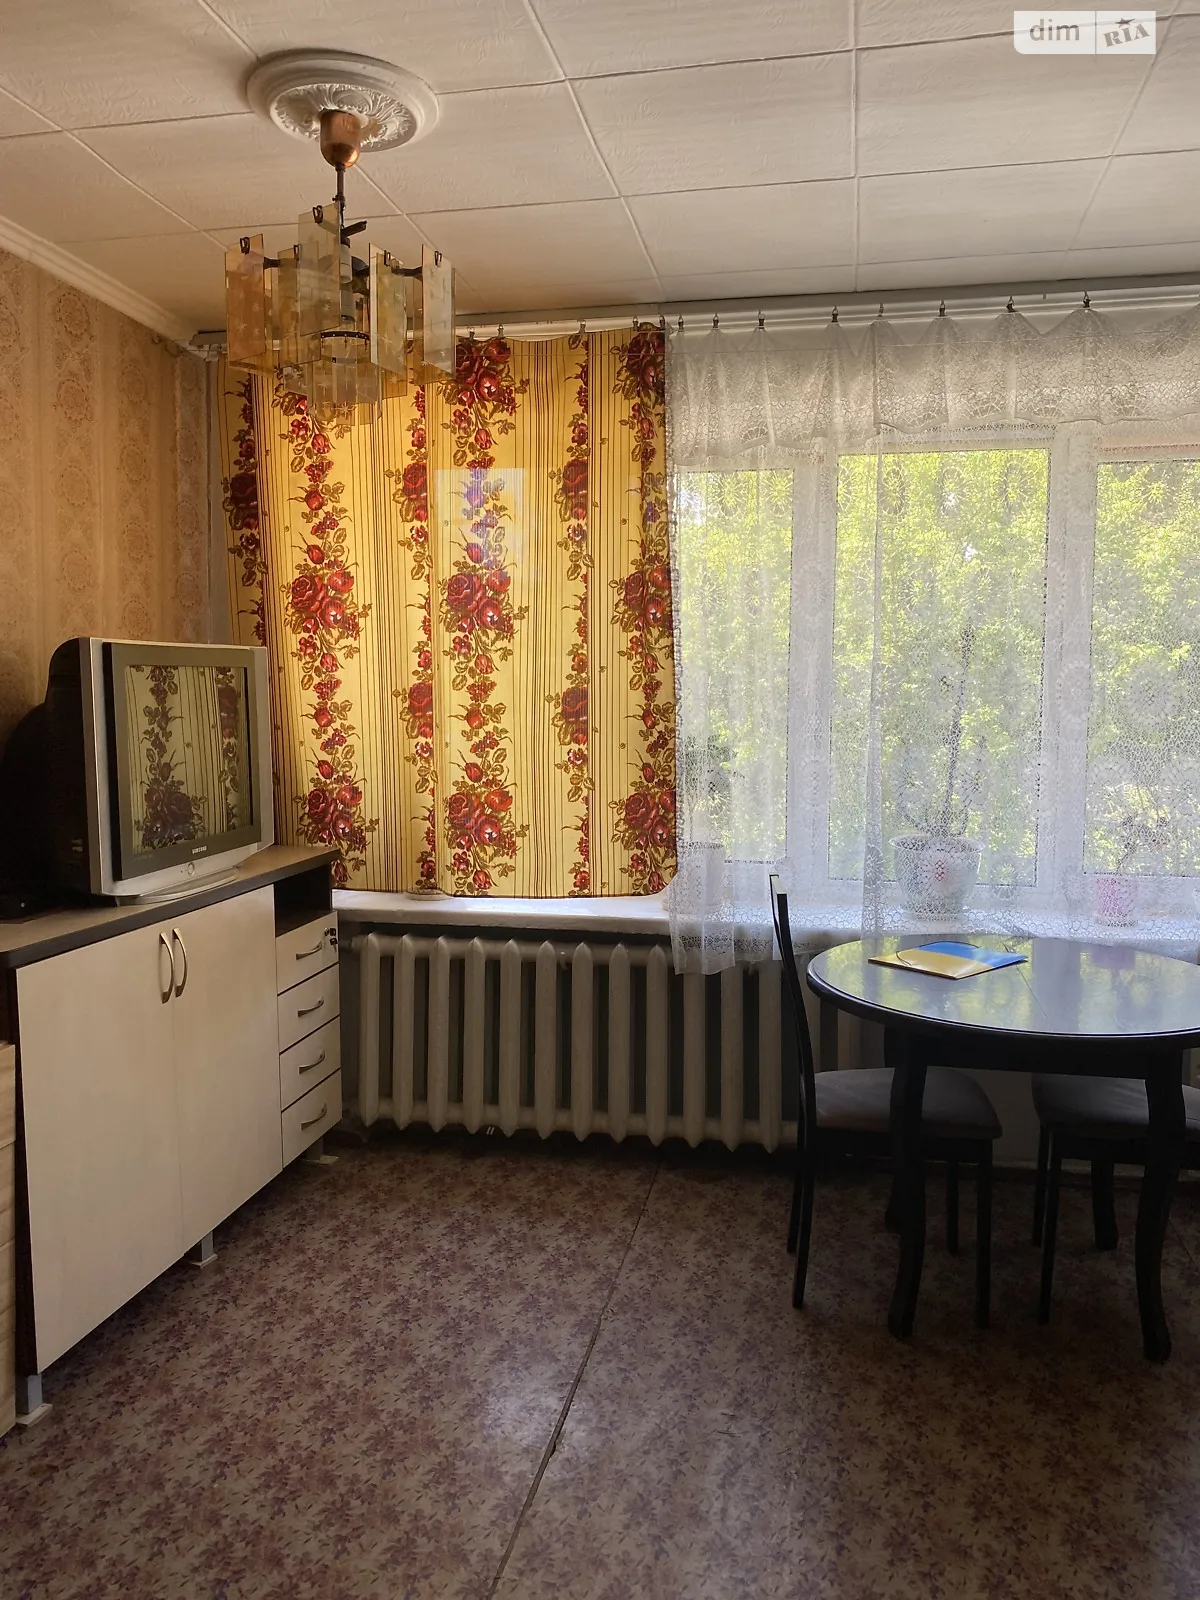 Продается комната 24.1 кв. м в Черкассах - фото 2